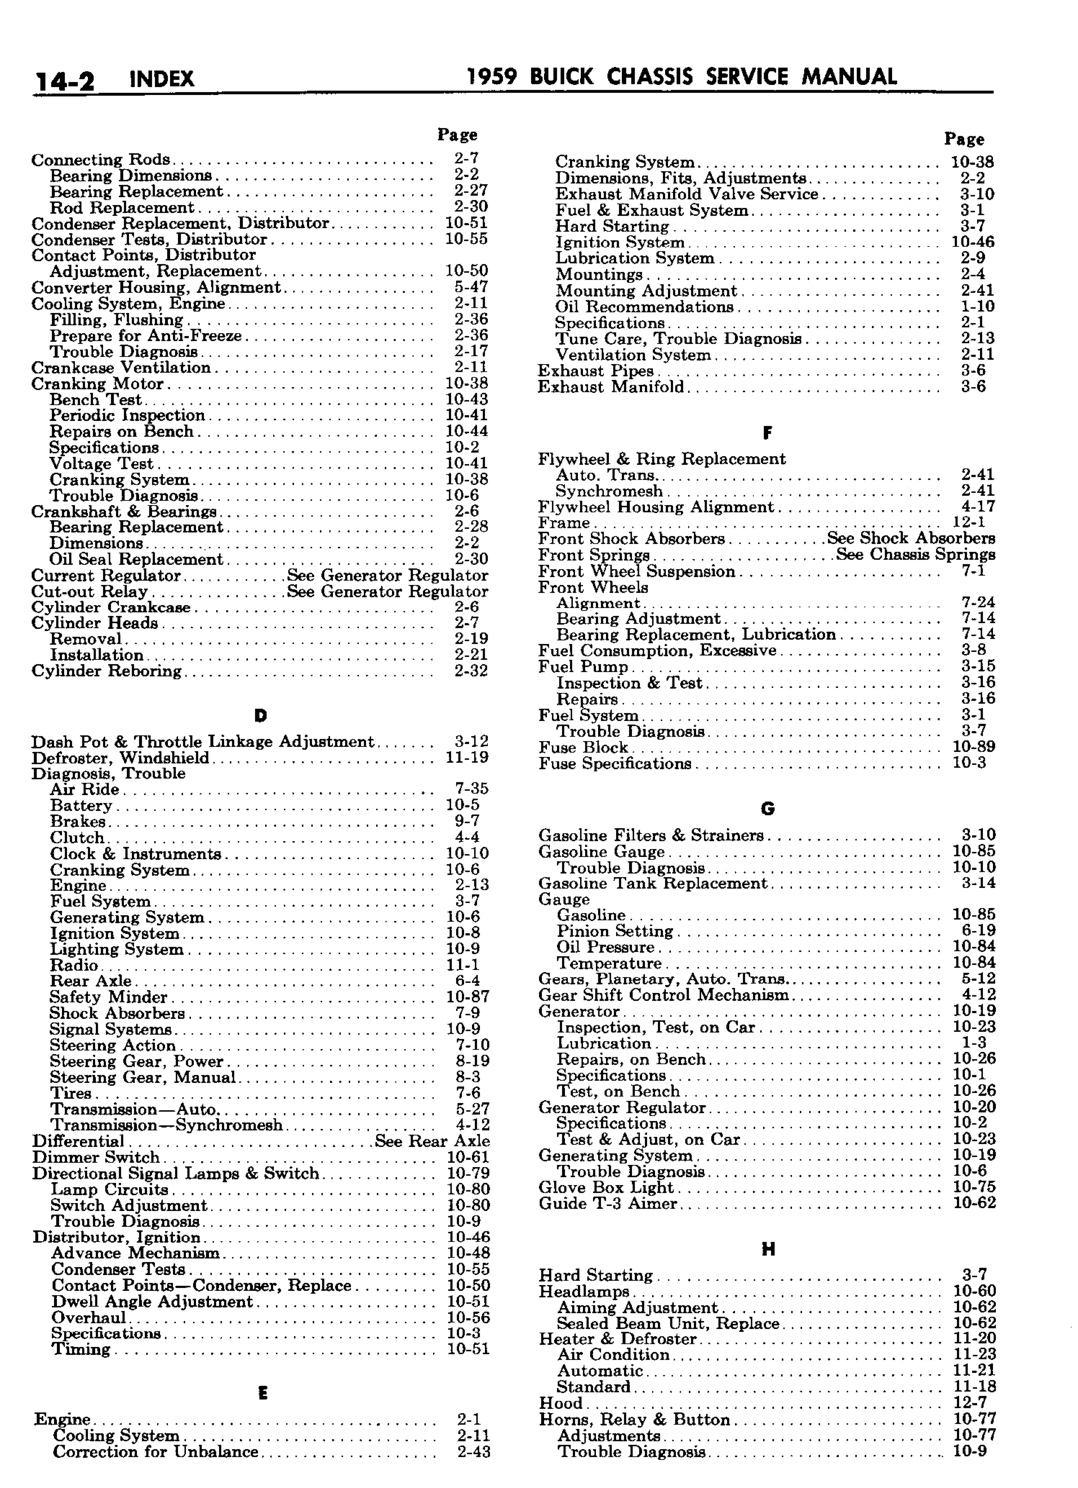 n_14 1959 Buick Shop Manual - Index-002-002.jpg